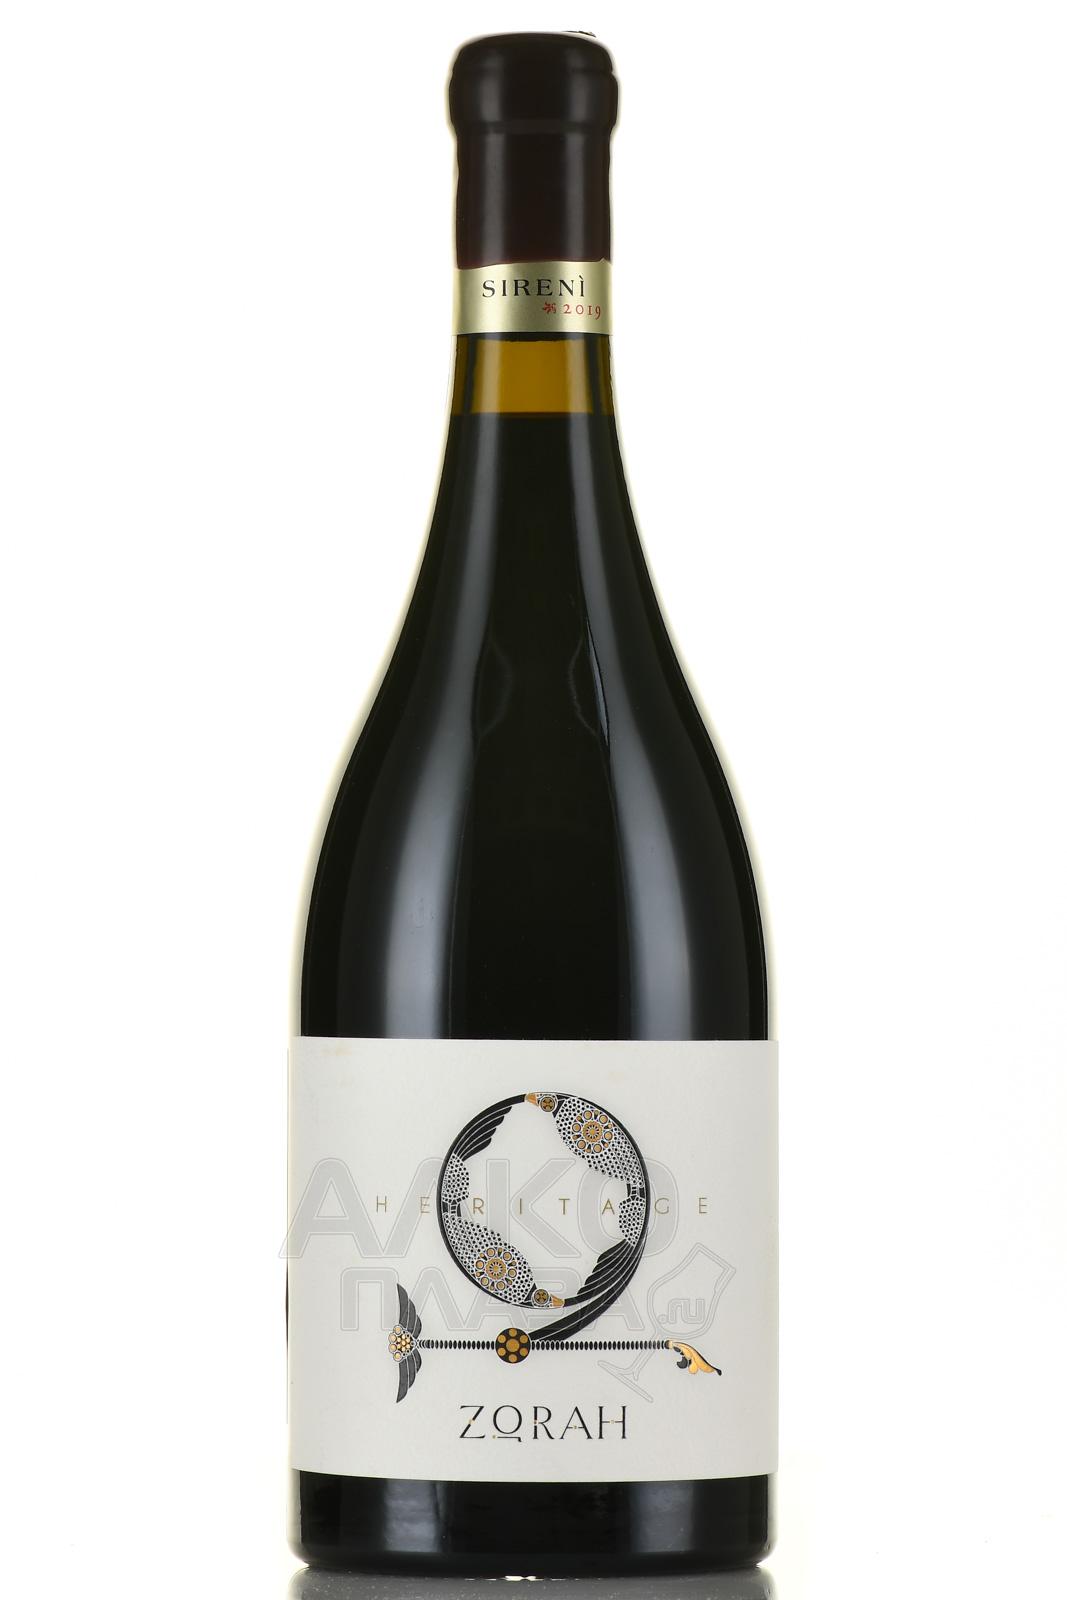 Zorah Heritage Sireni - вино Зора Геритедж Сирени 0.75 л красное сухое